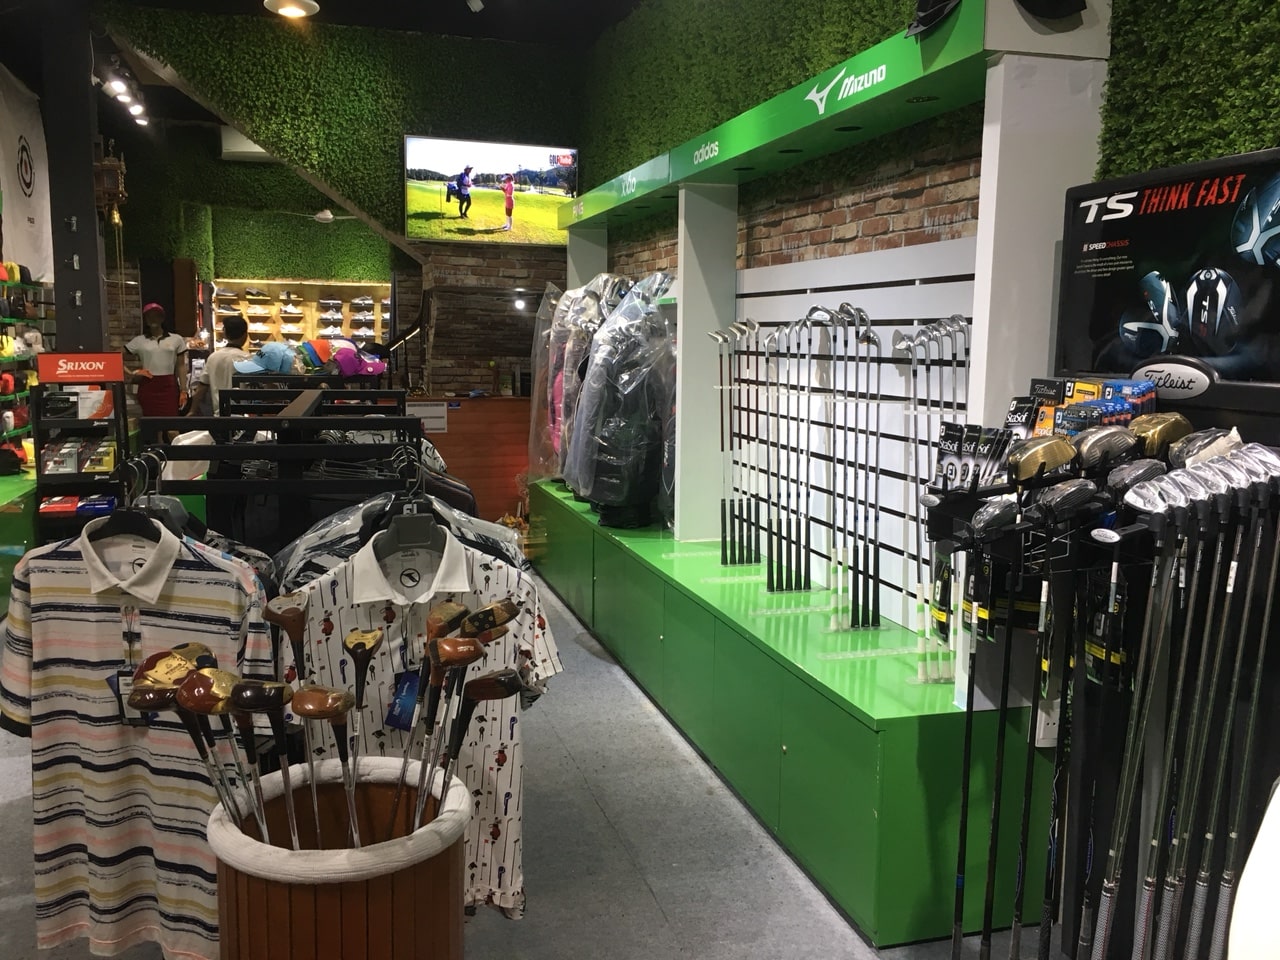 shop phụ kiện golf